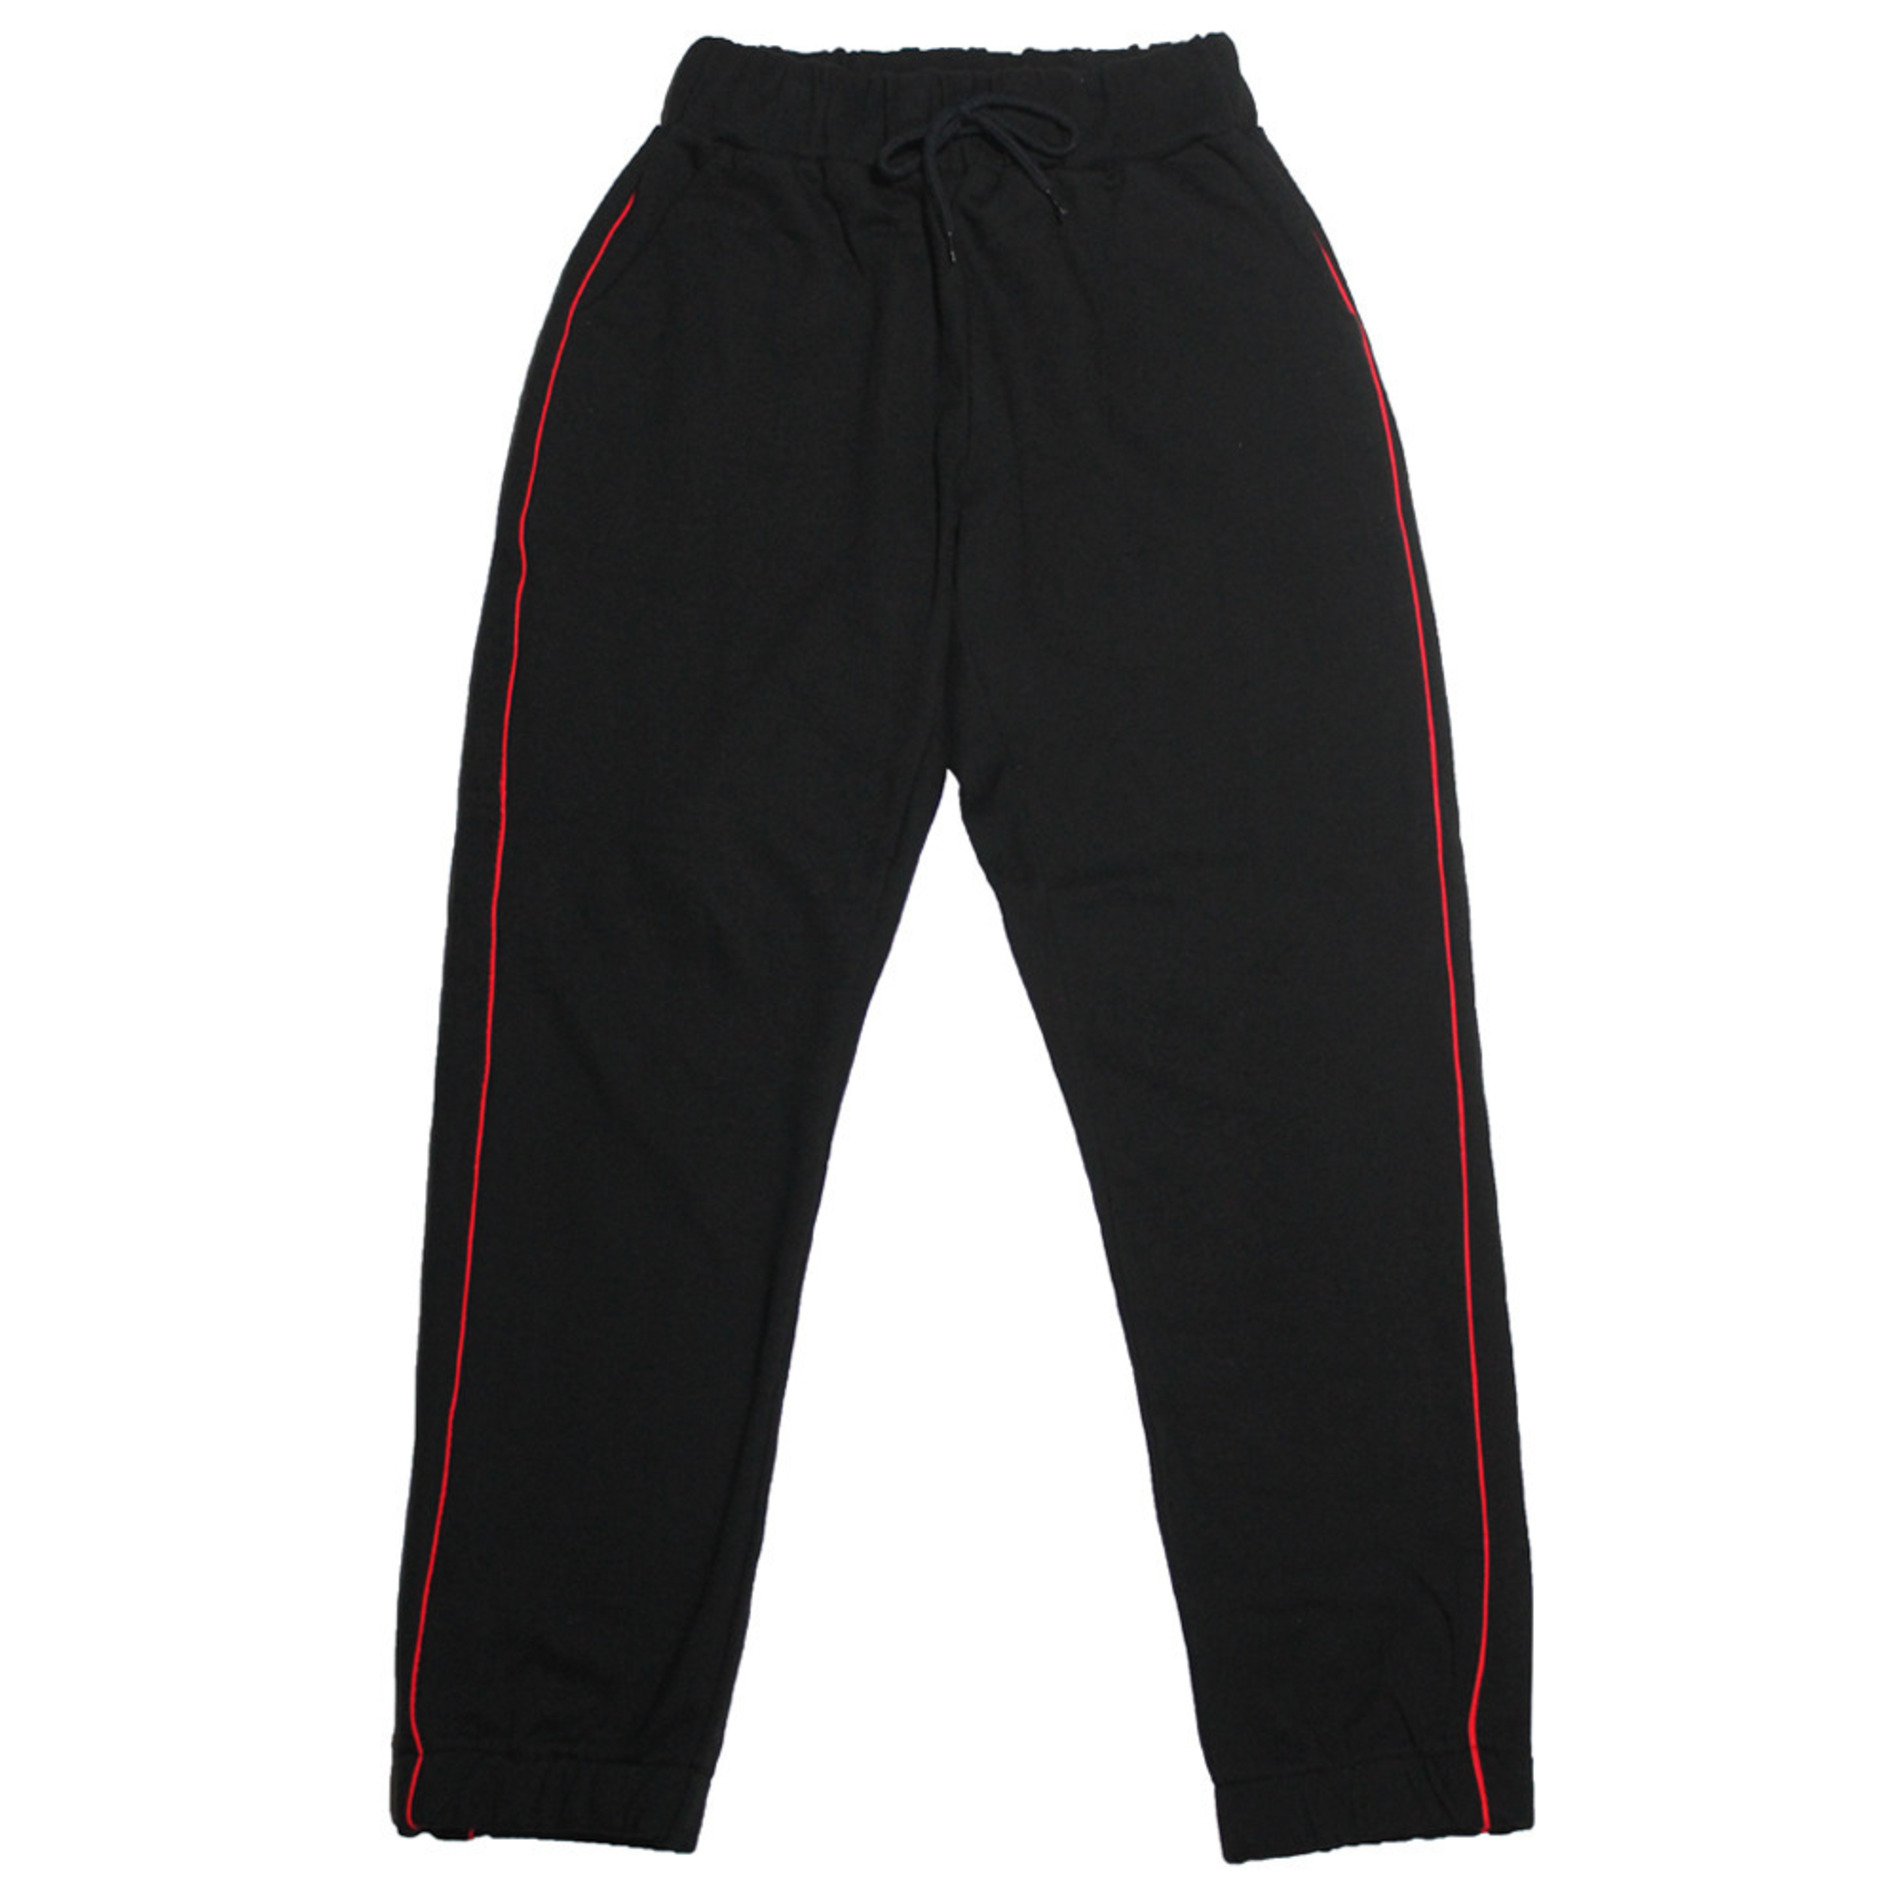 Line training pants (black/red)